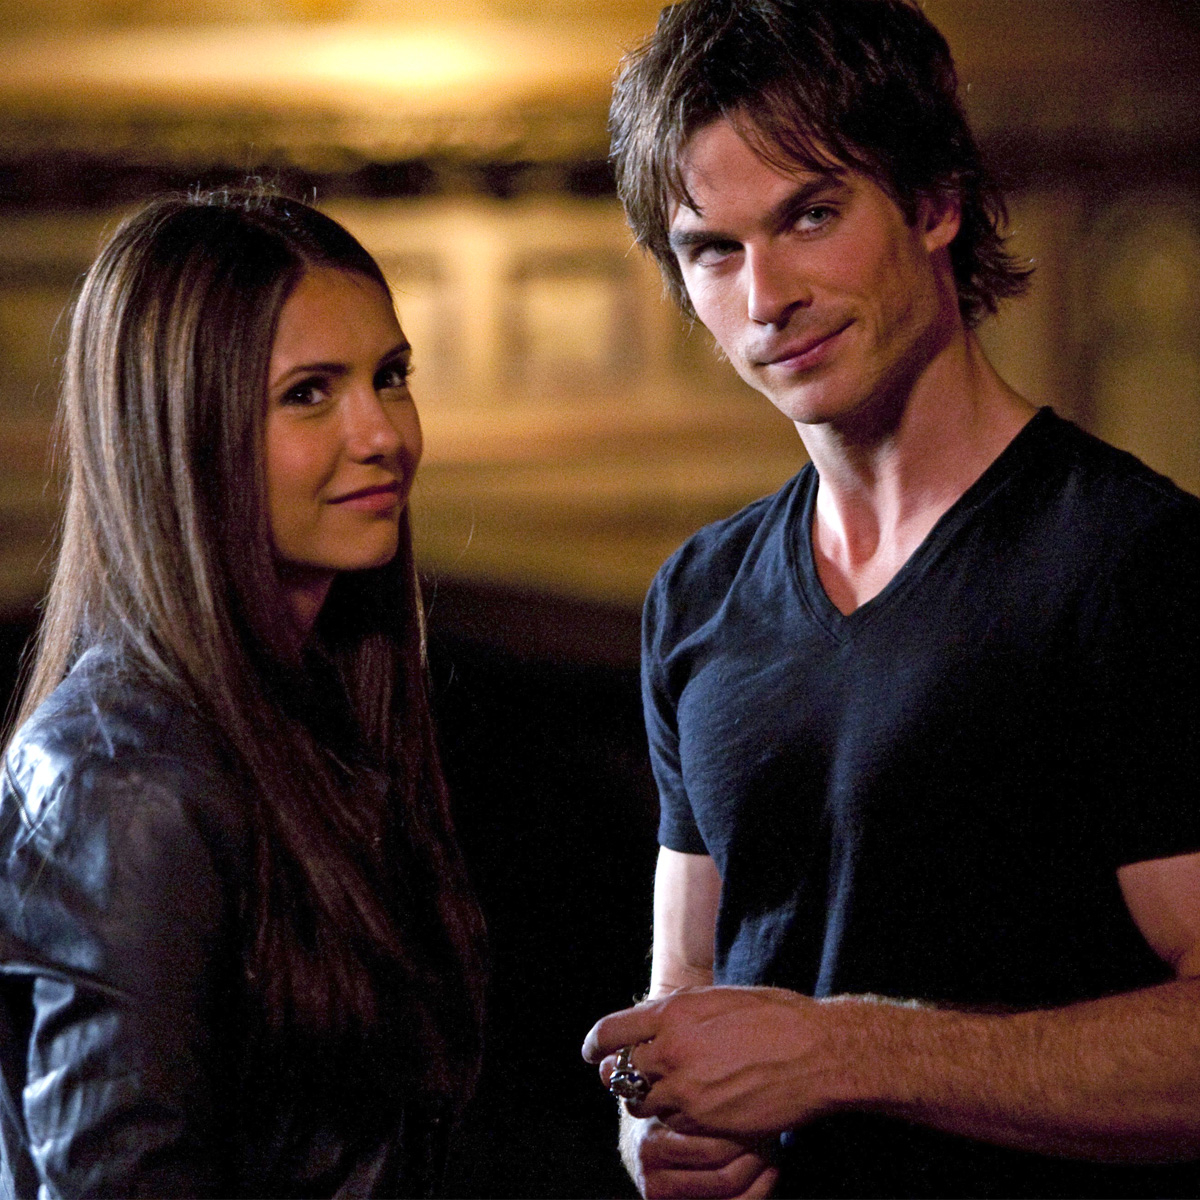 Vampire Diaries' Season 6 Spoilers: Will Elena And Damon Break Up